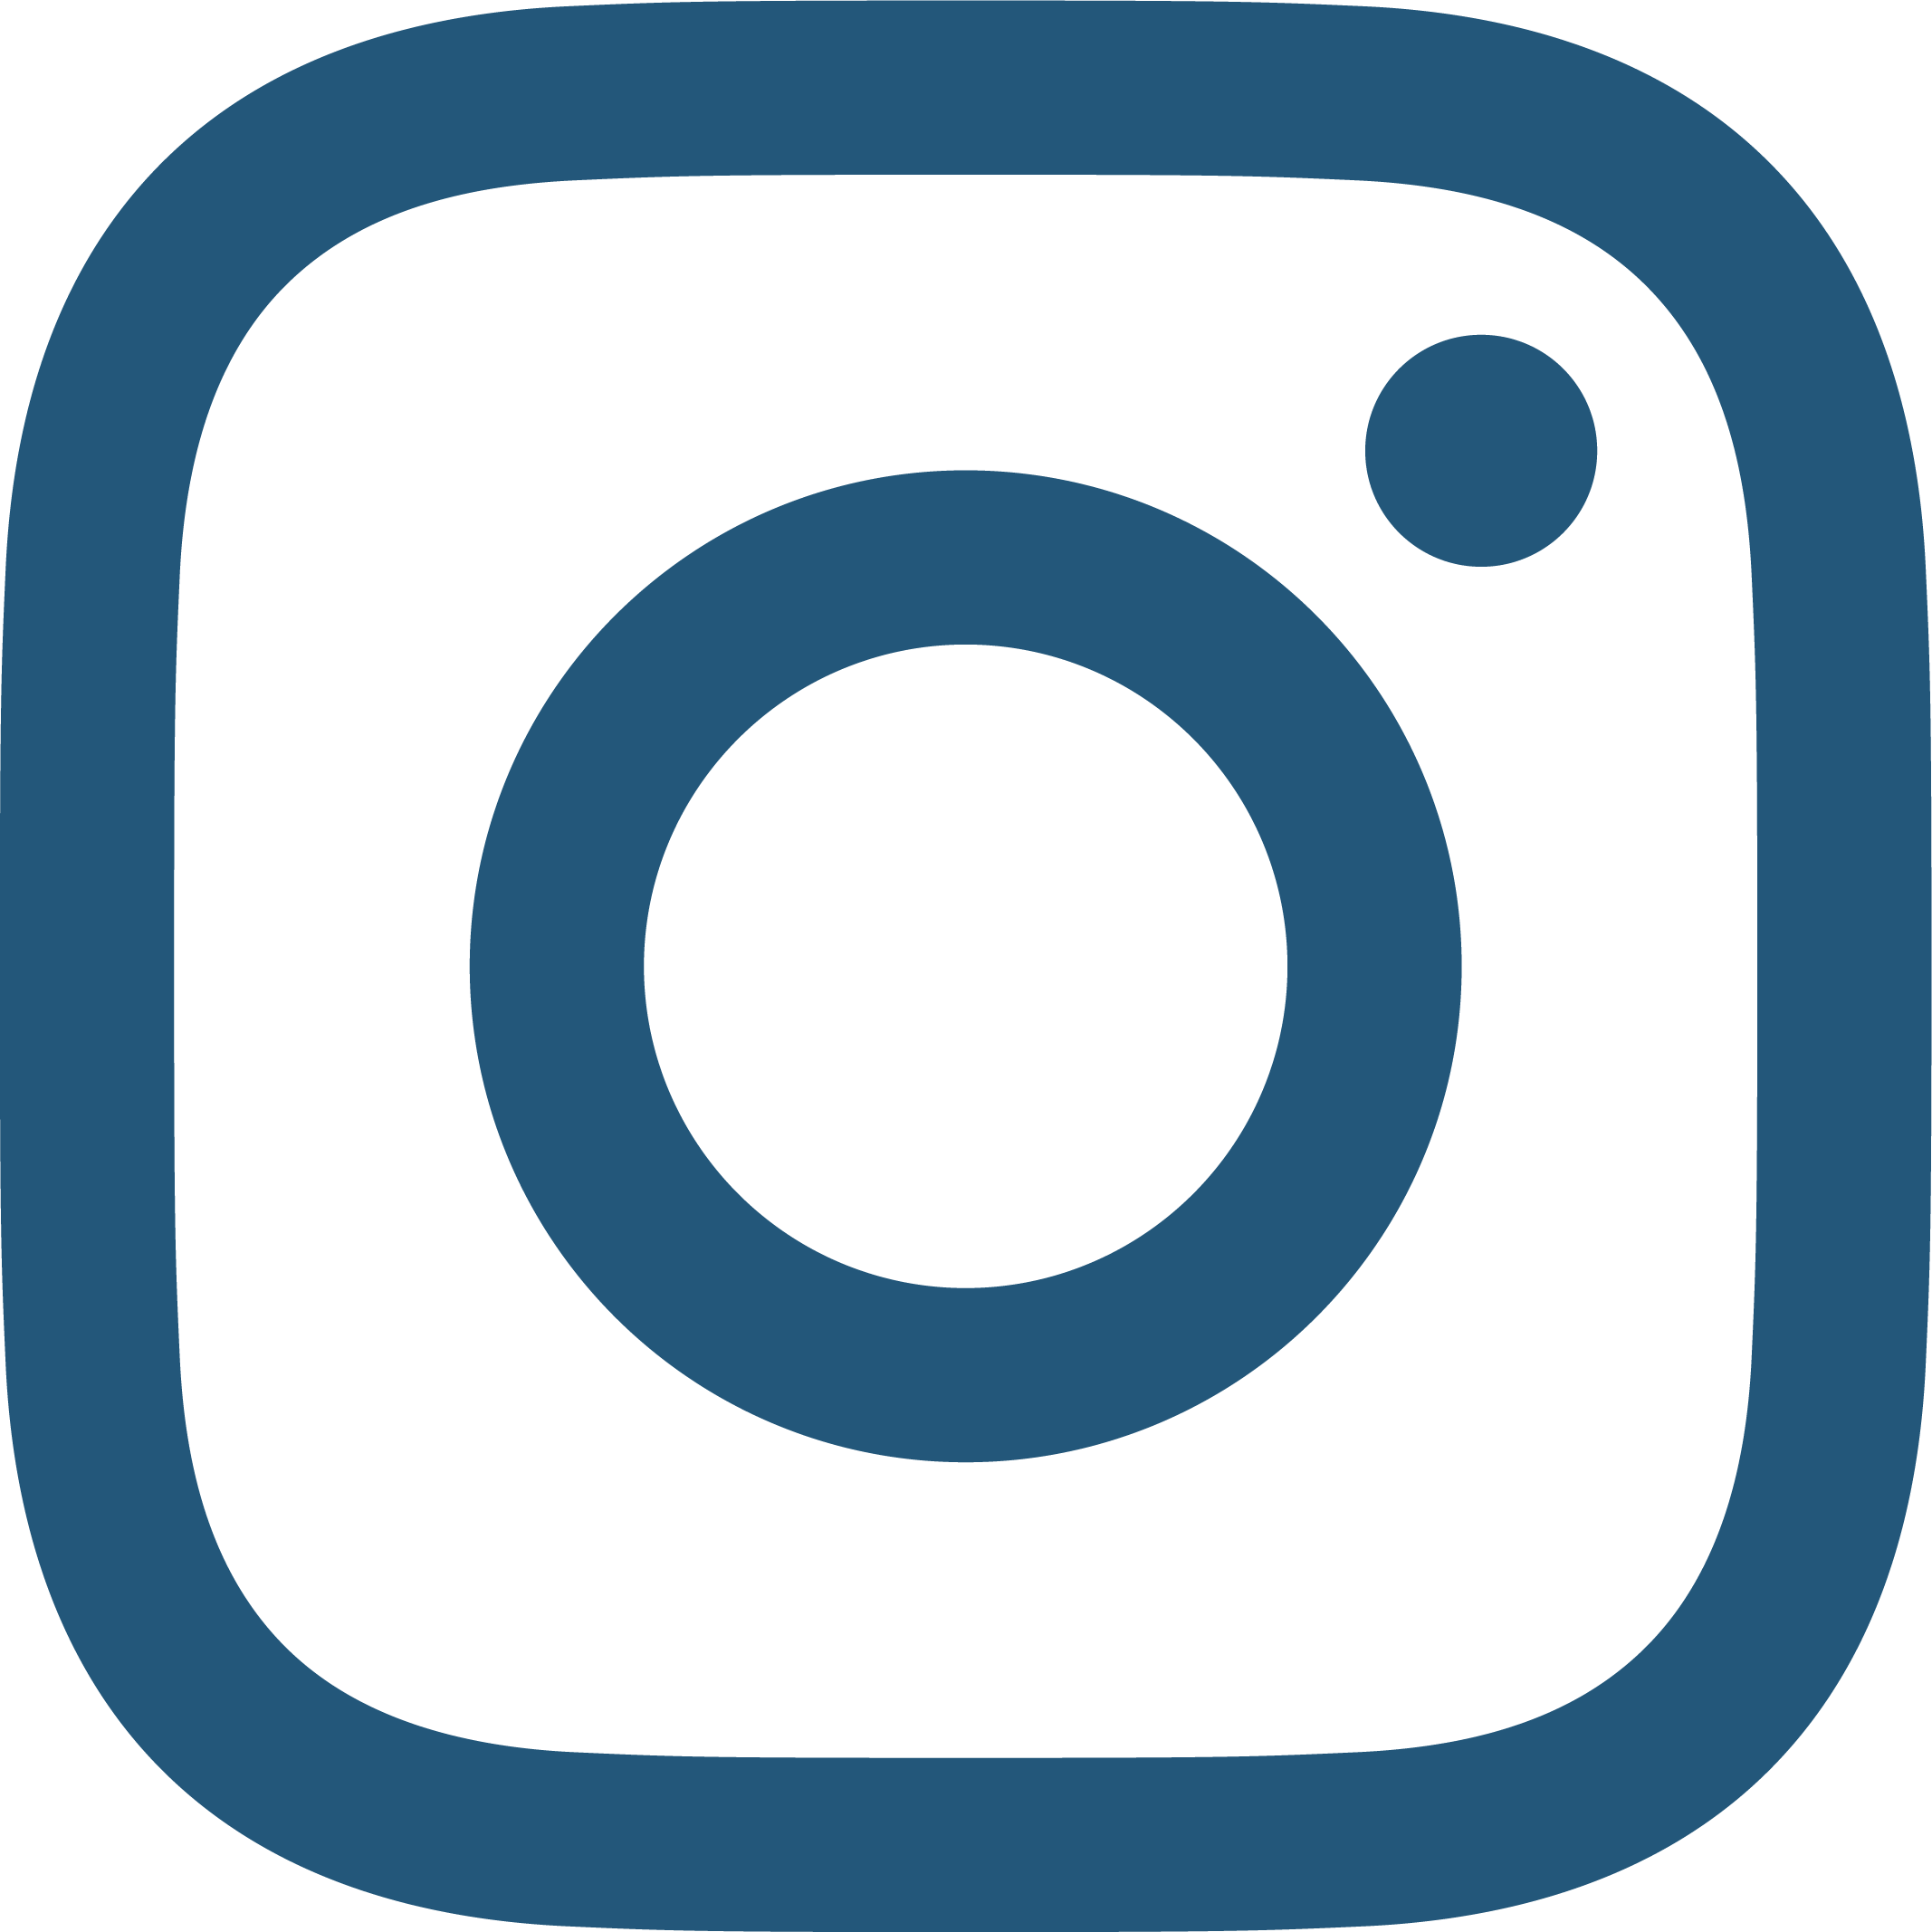 icon of Instagram logo in dark blue